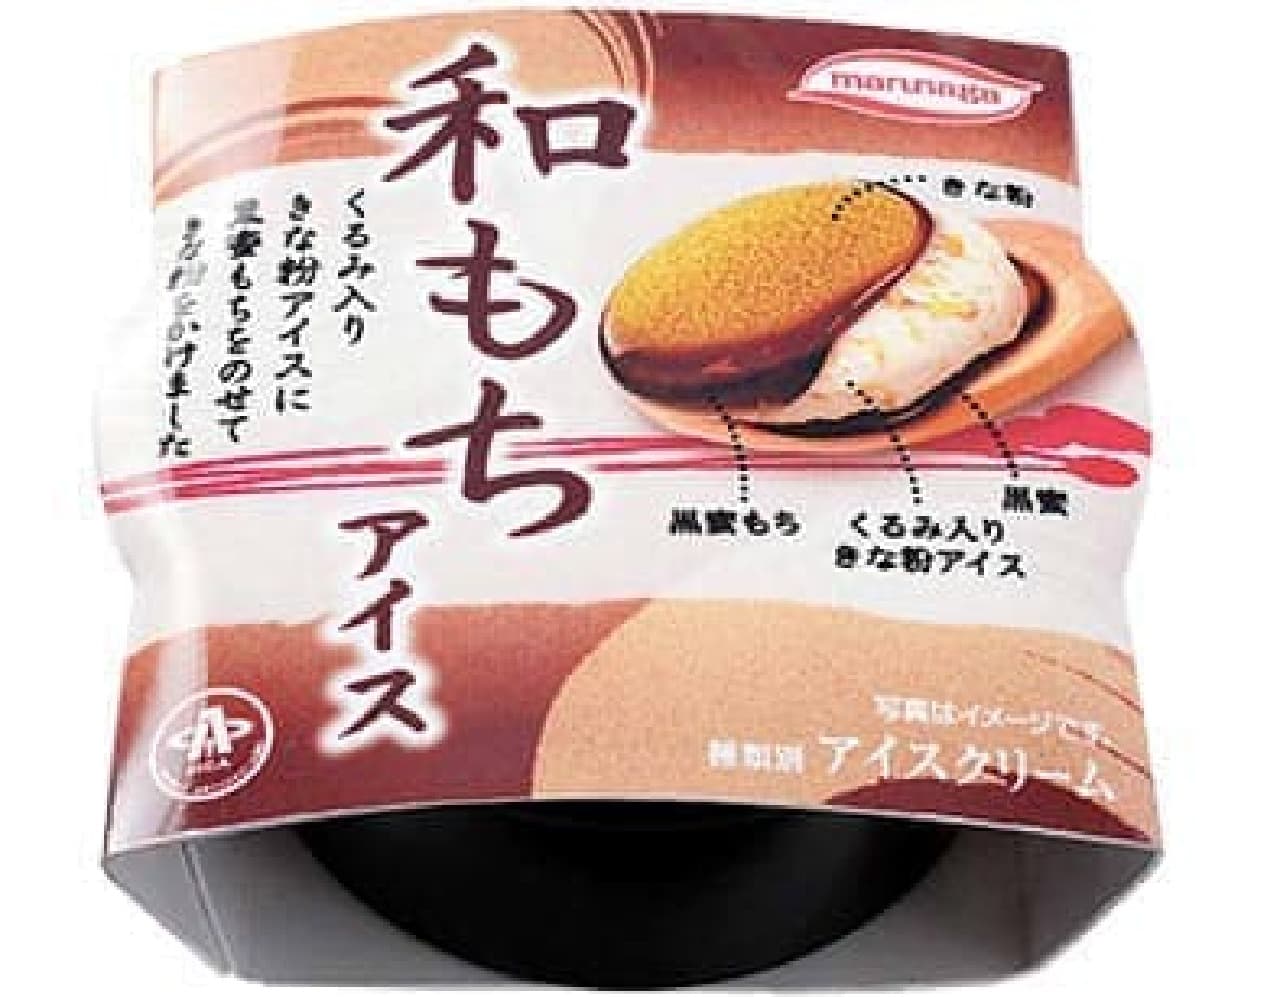 Lawson "Wa Mochi Ice Cream-Kuromitsu Mochi Tokinako Ice Cream-"